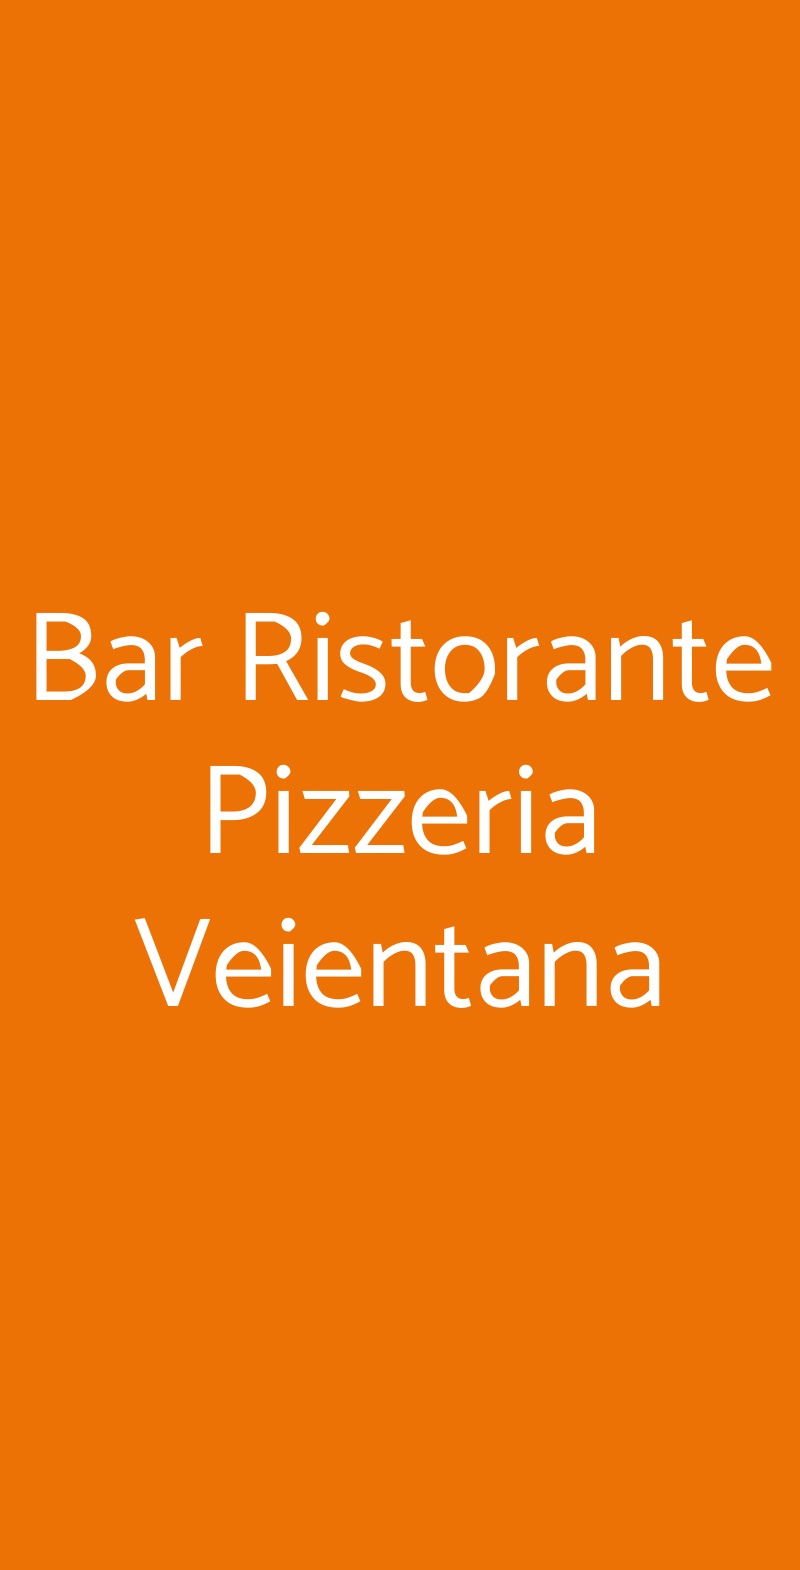 Bar Ristorante Pizzeria Veientana Roma menù 1 pagina